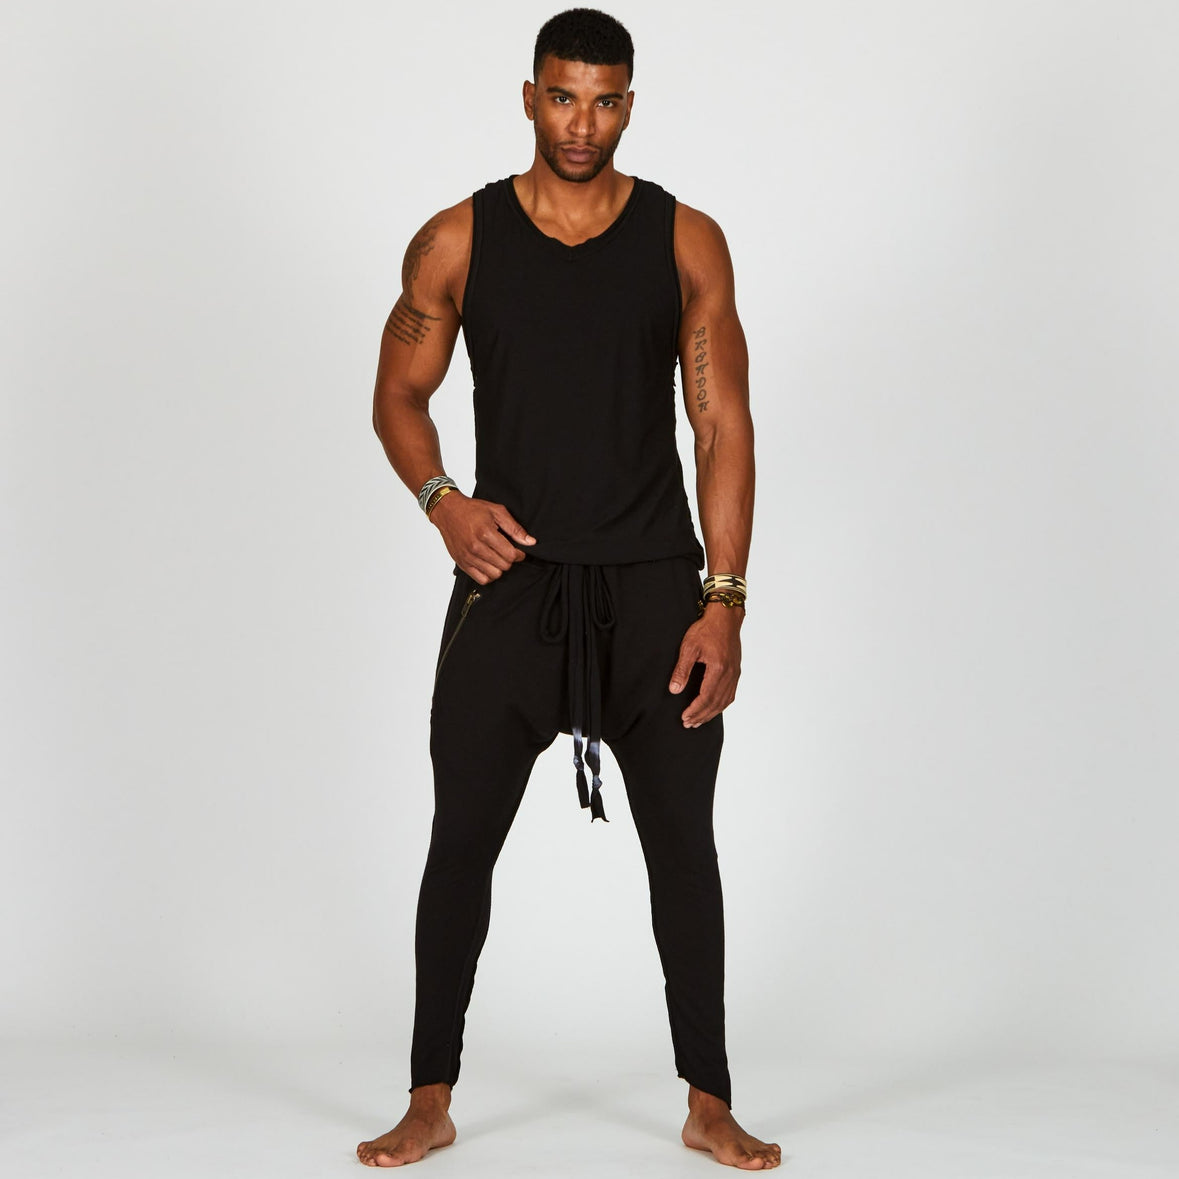 Distressed Black Joggers - Trendy Sweatpants - Drawstring Joggers